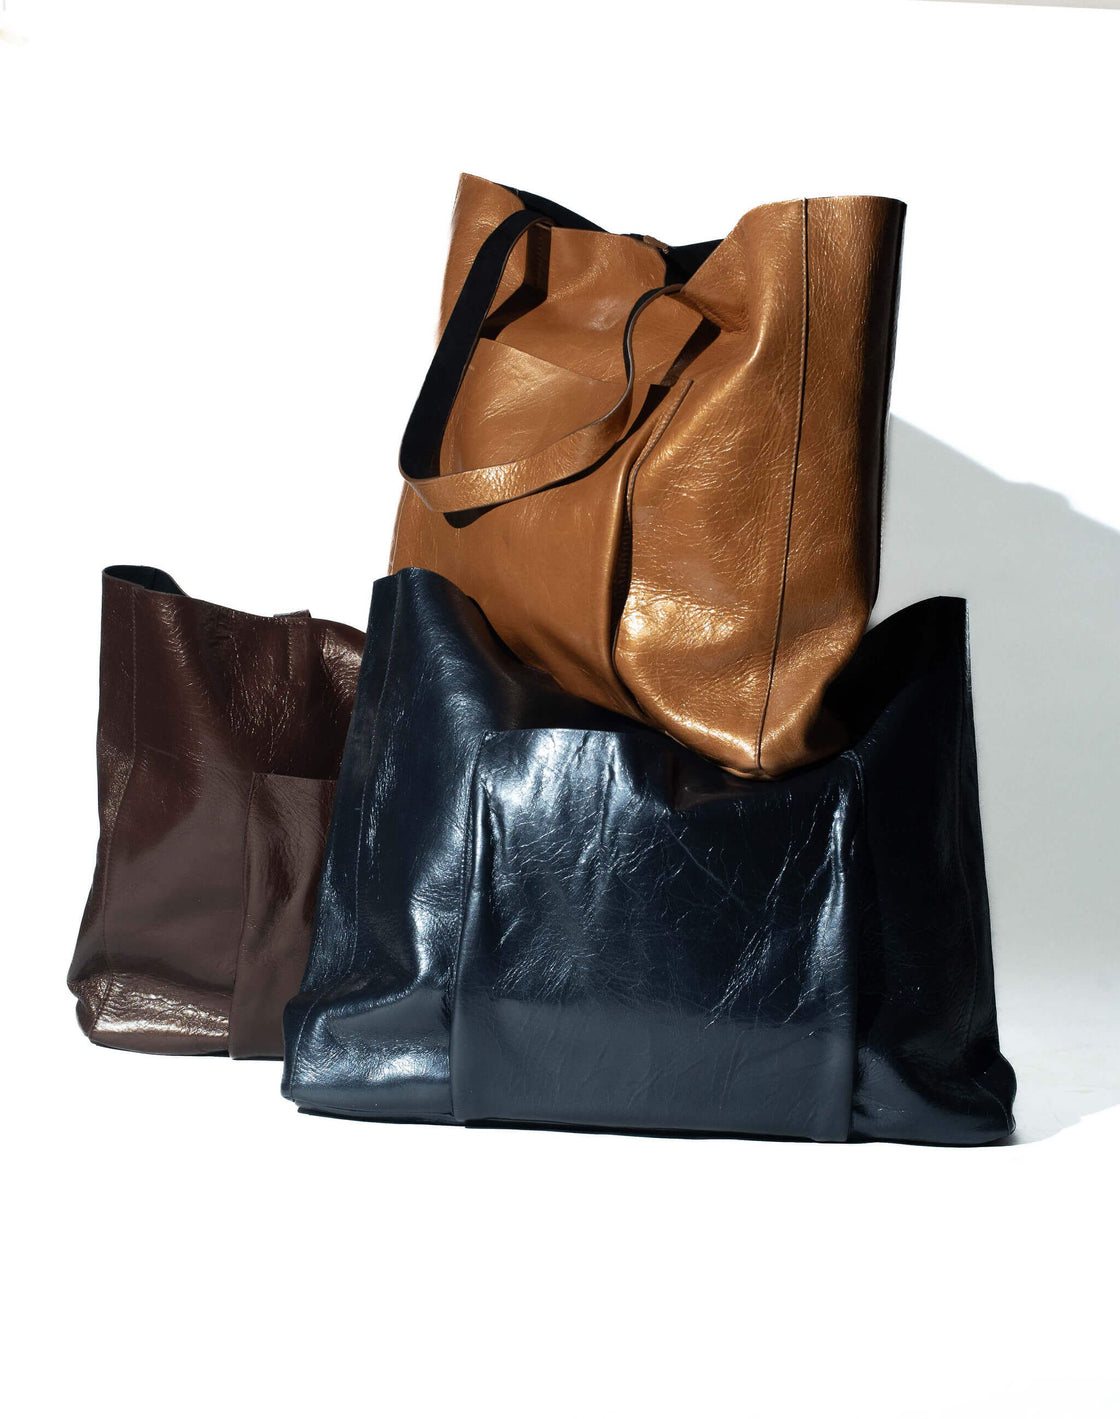 Maya - Shopper Bag